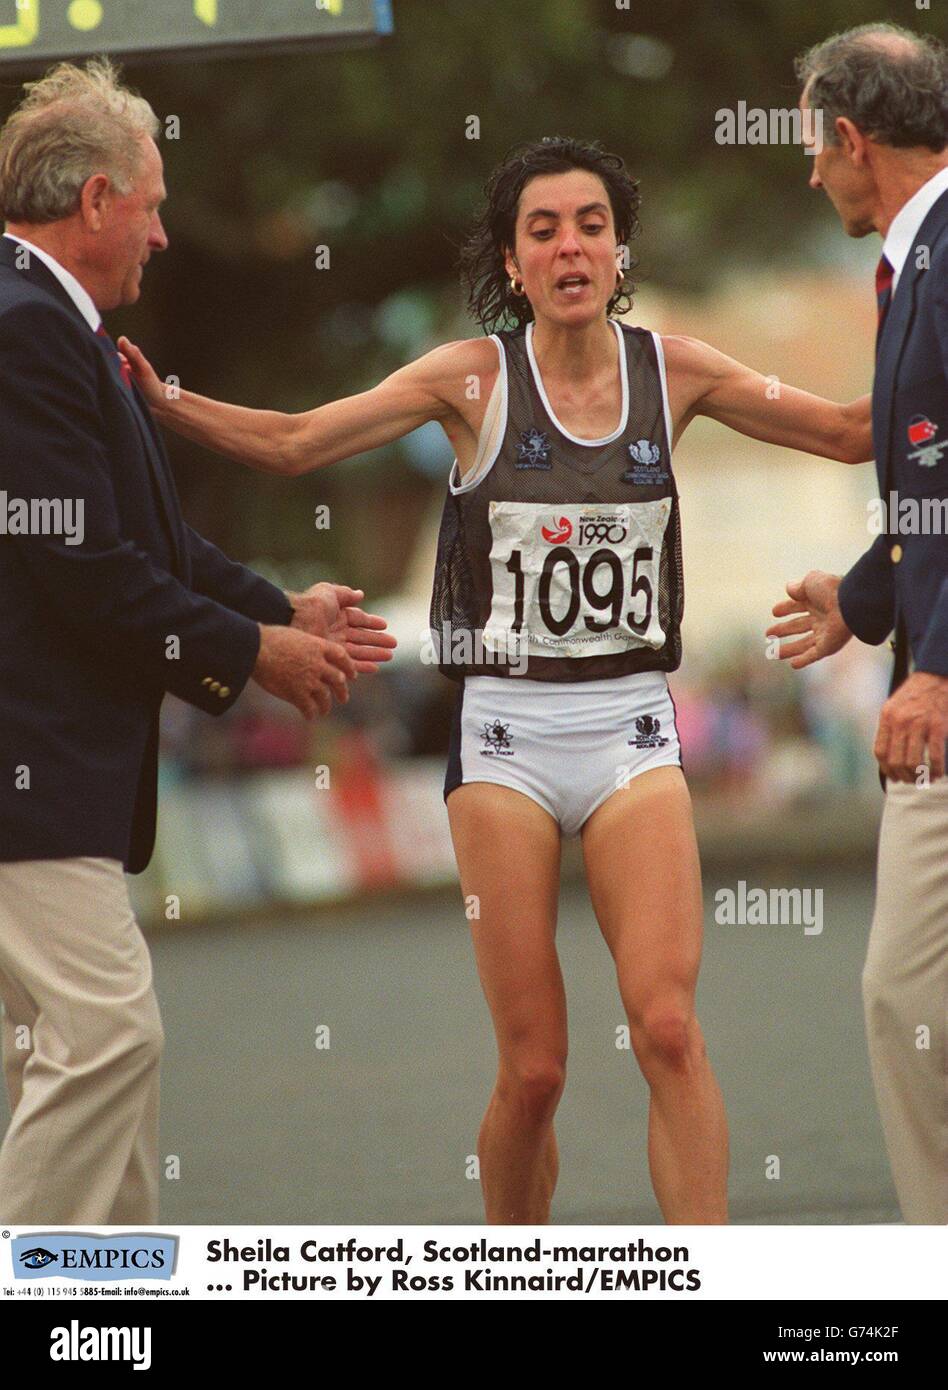 Sheila Catford, Scotland-marathon ... Picture by Ross Kinnaird/EMPICS Stock Photo